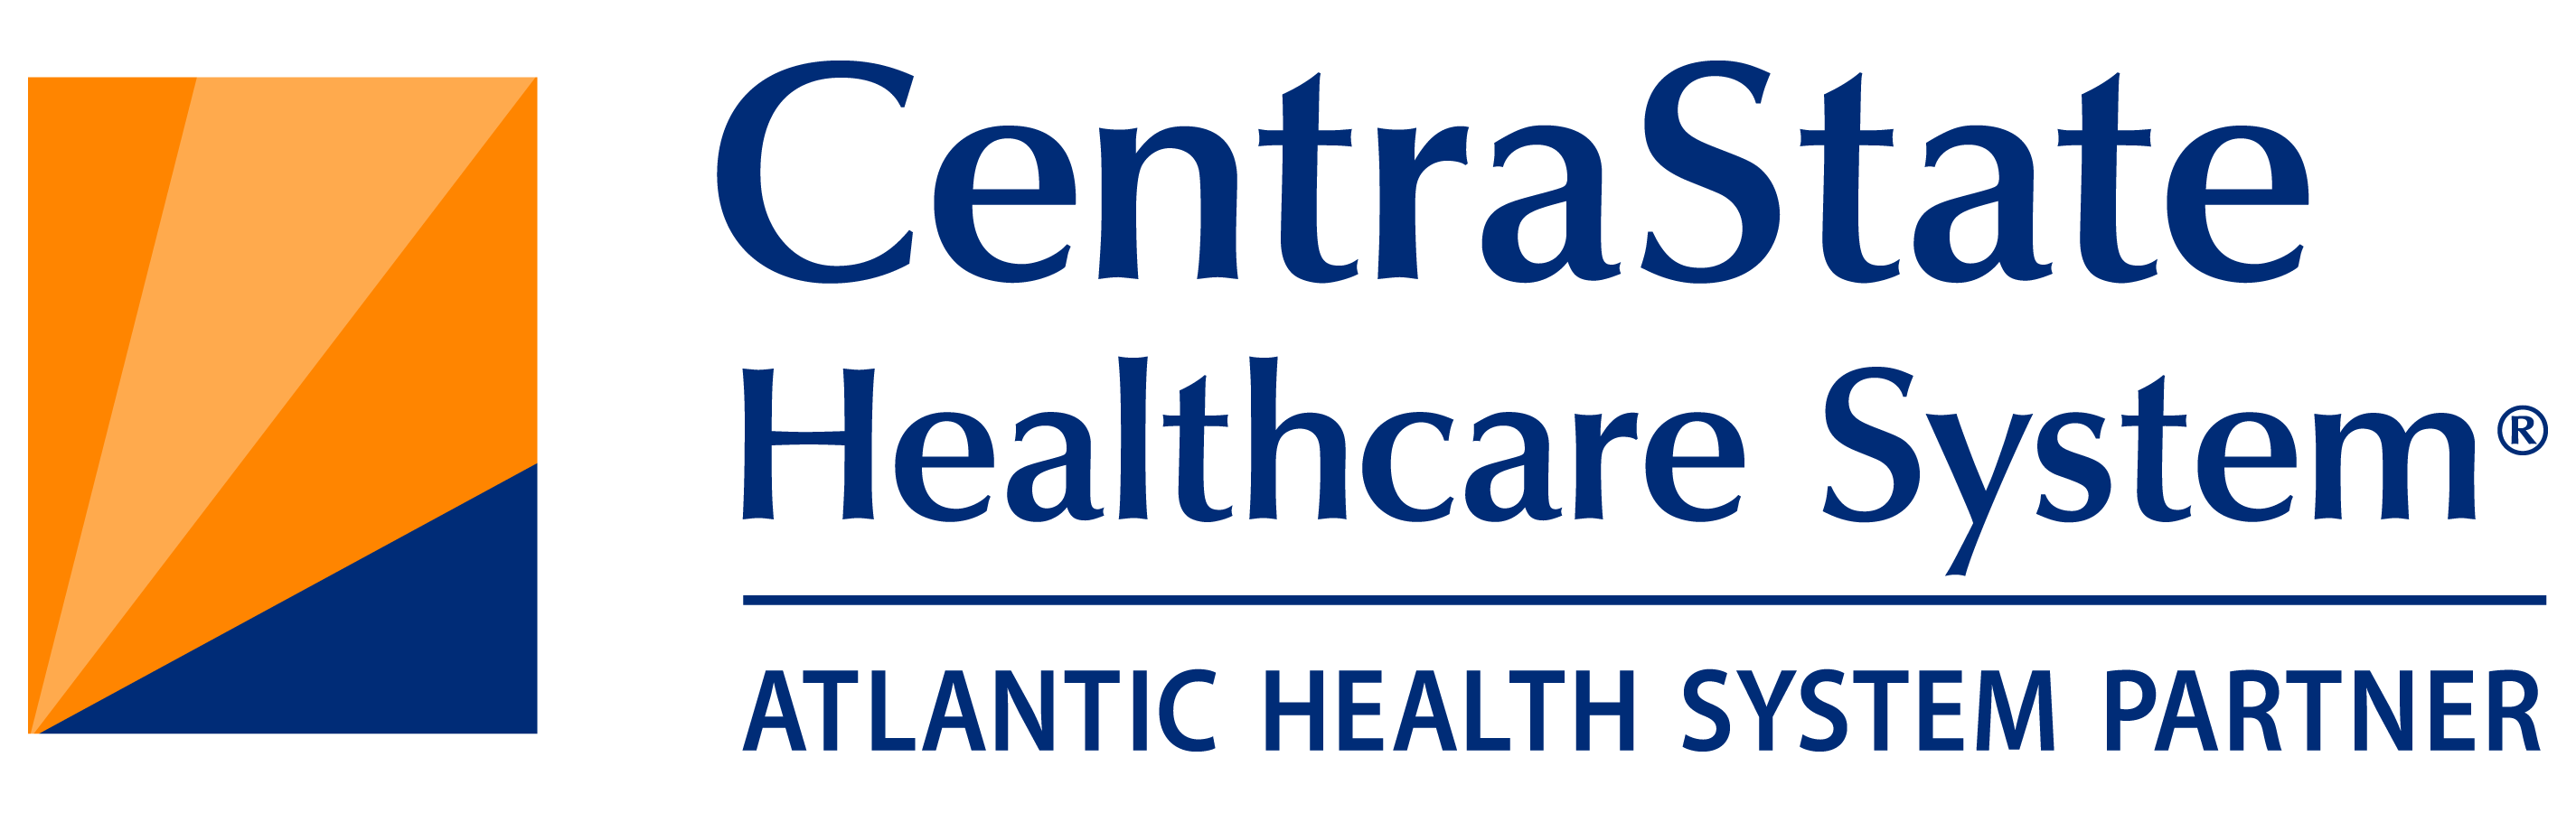 CentraState Healthcare System logo